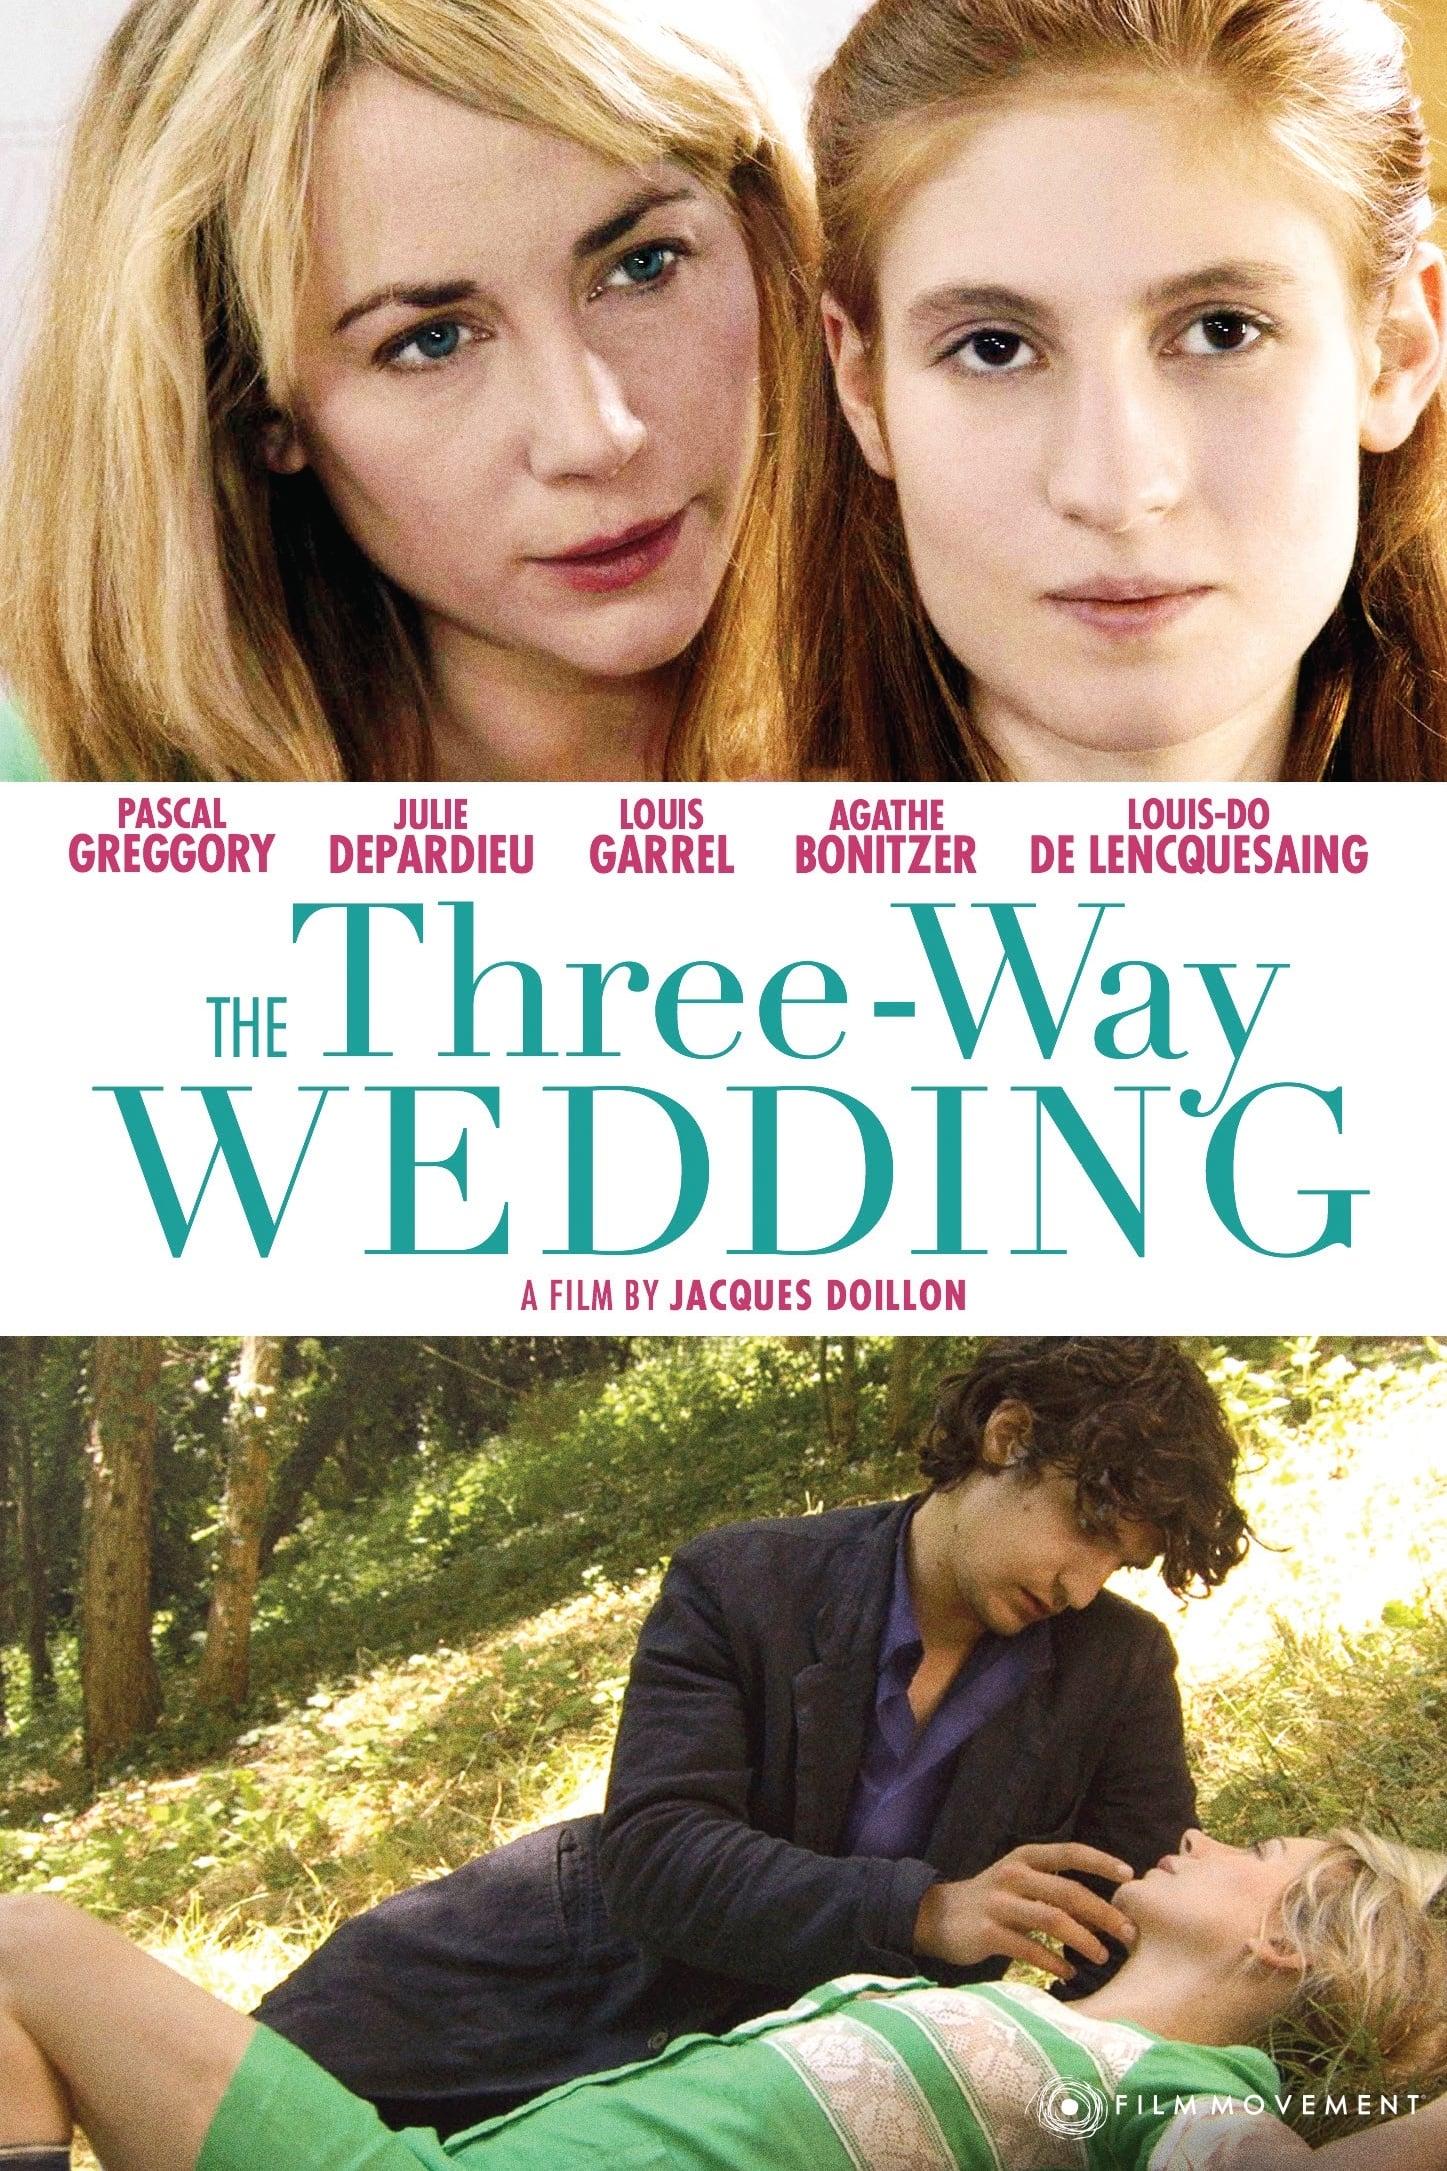 The Three-way Wedding poster